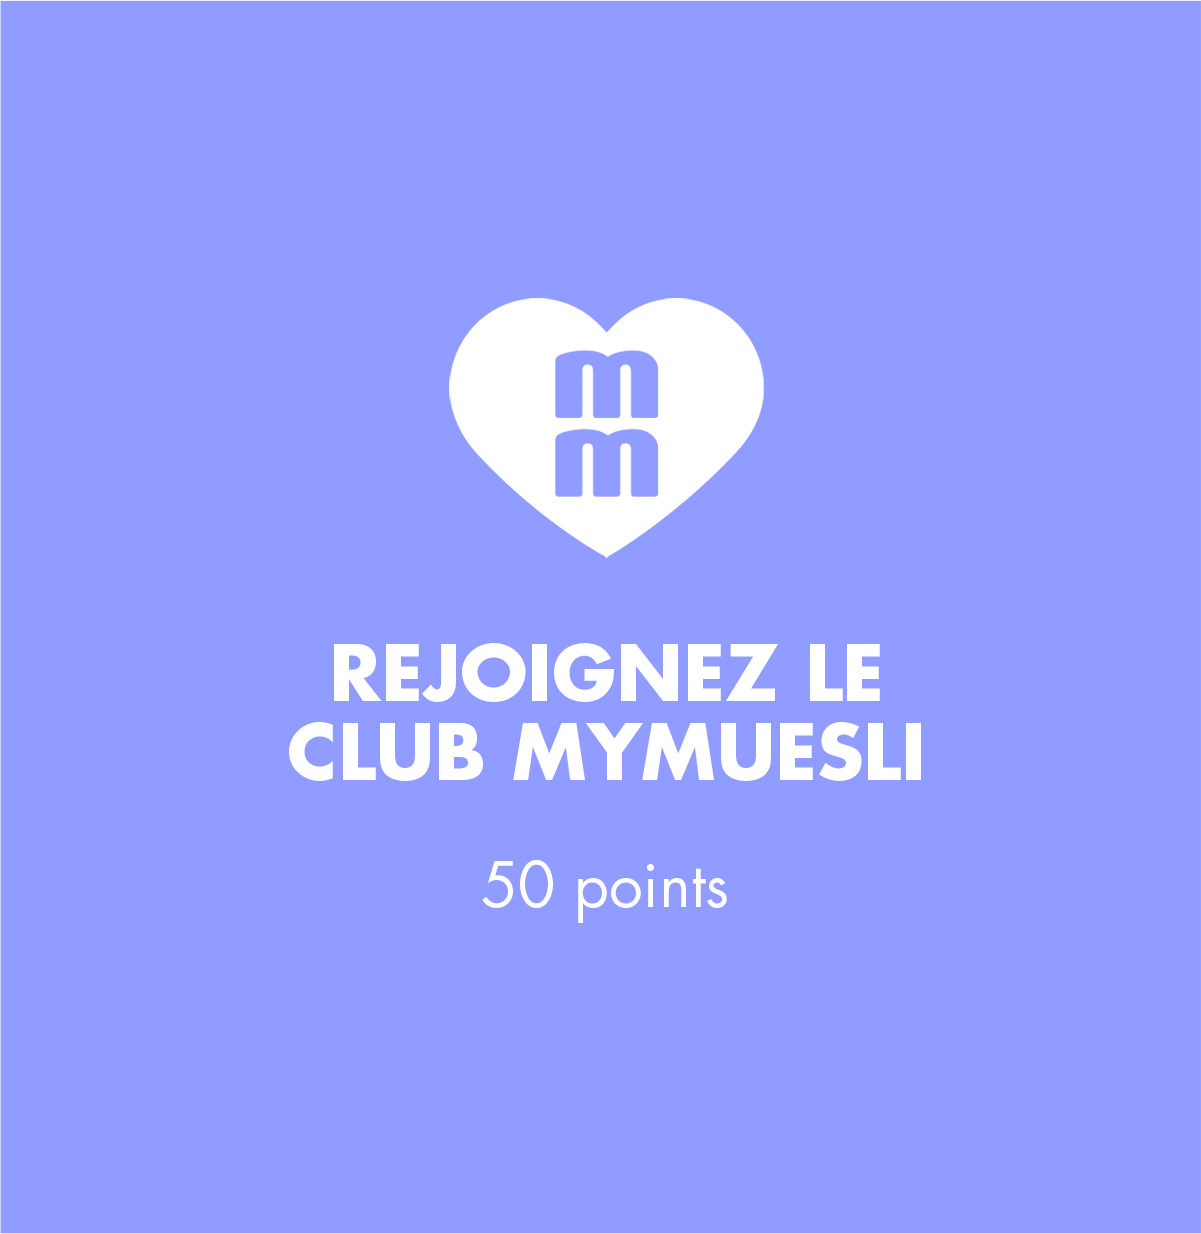 vorteile-mymuesli-club-1-FR.png